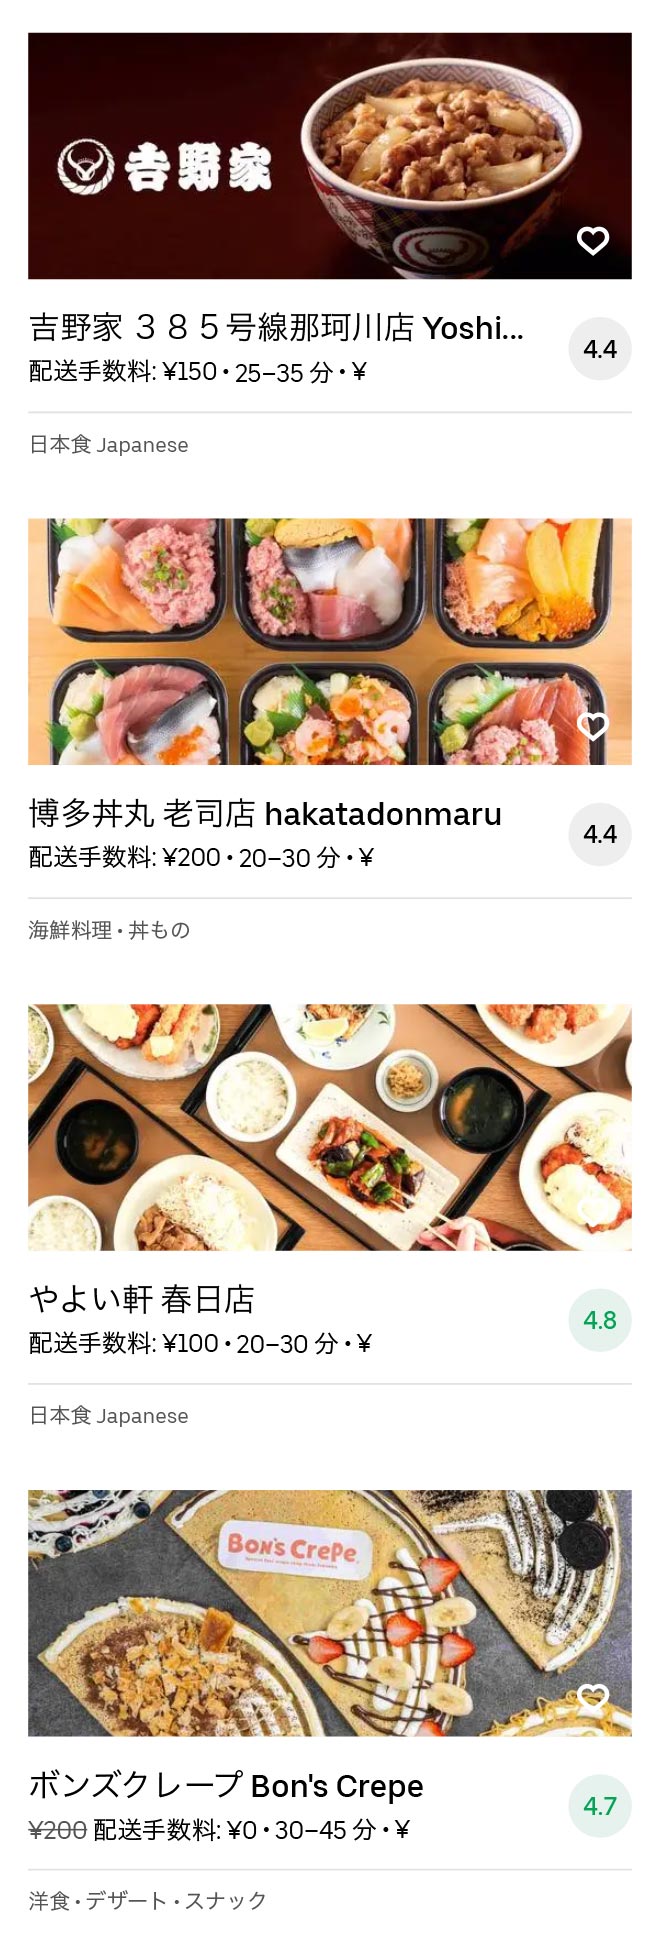 Hakata minami menu 2010 05